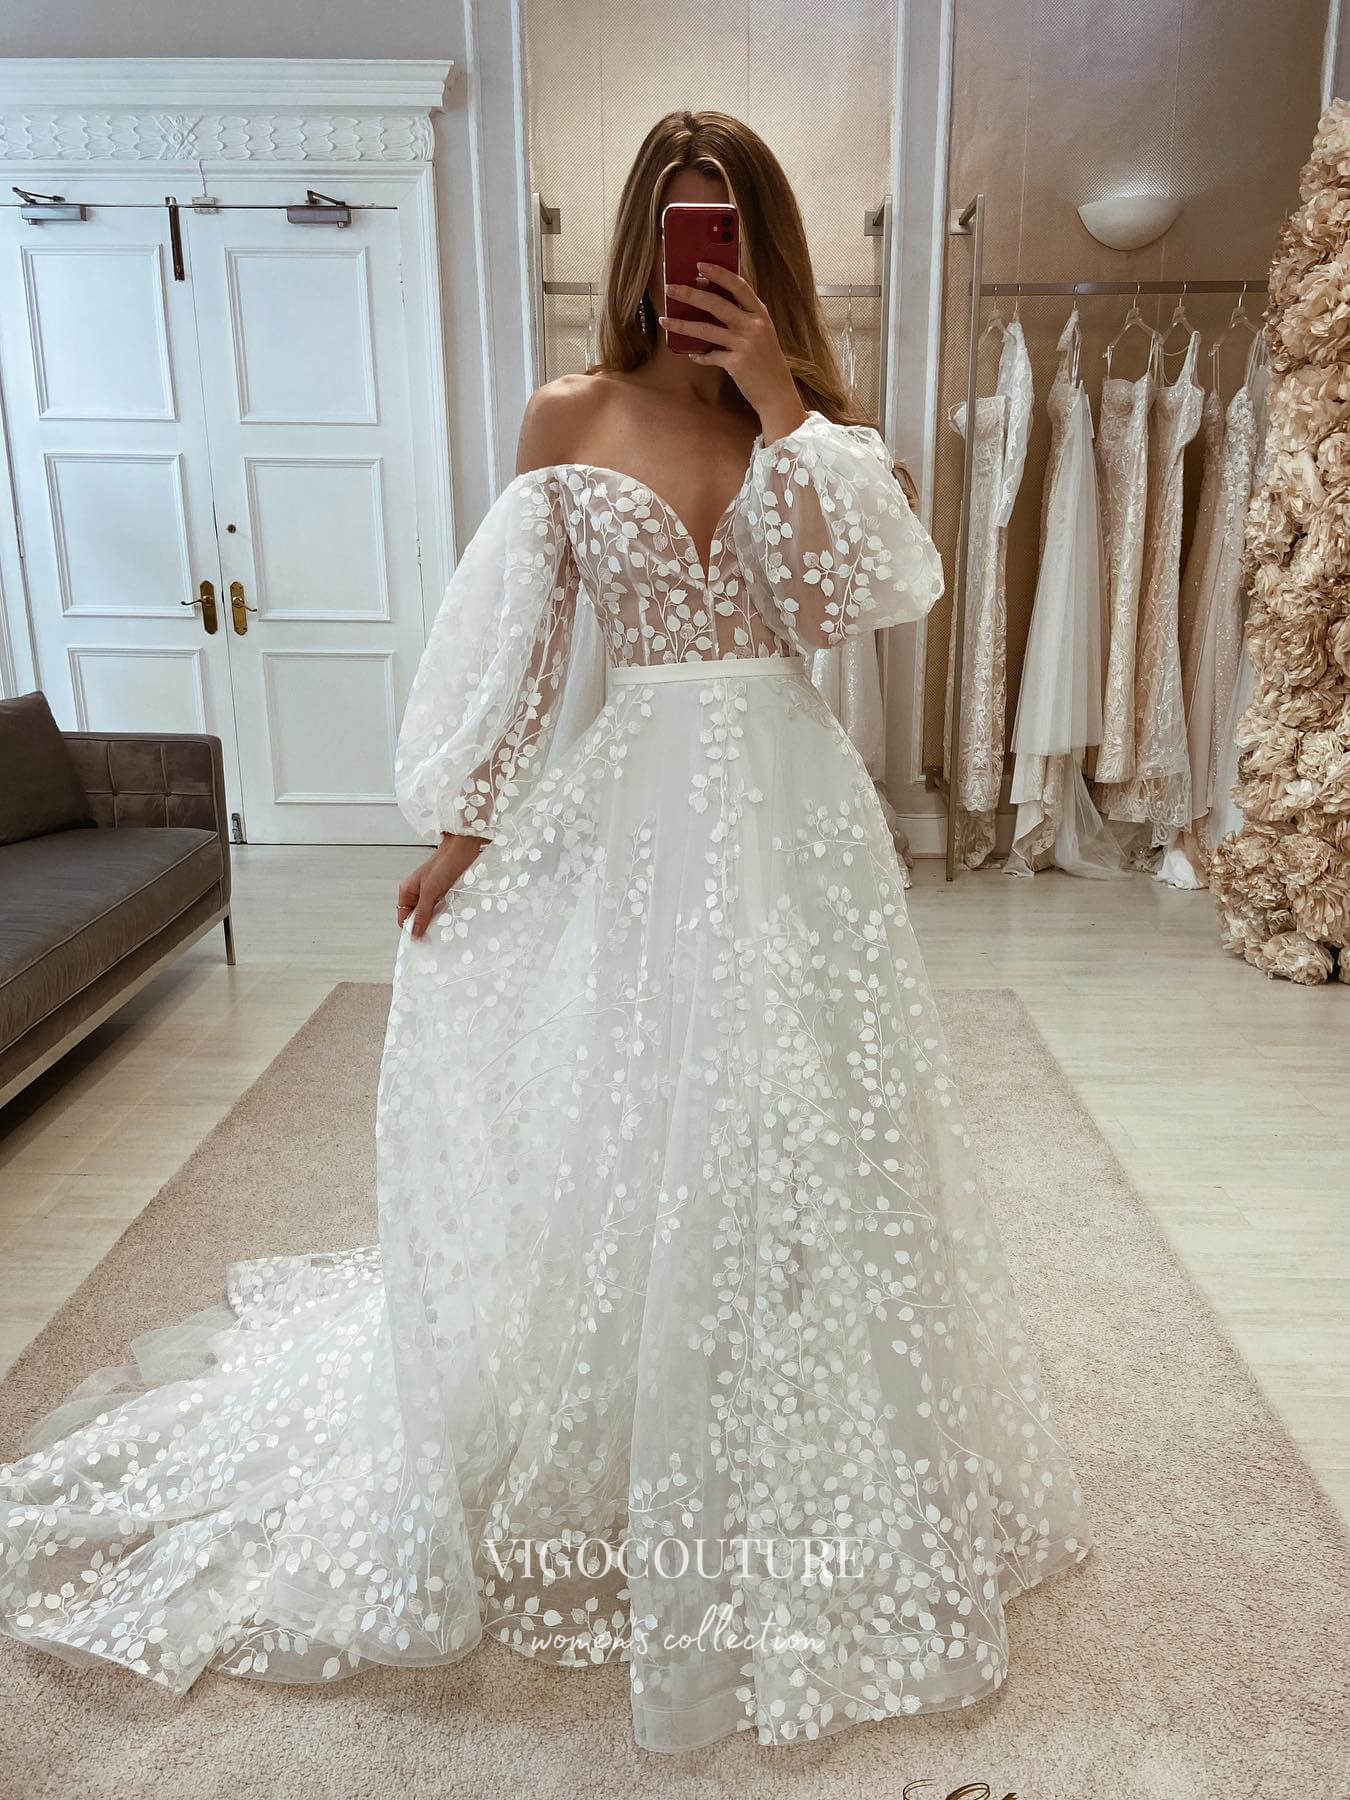 vigocouture-Lace Applique Long Sleeve Wedding Dresses A-Line Sweetheart Neck Bridal Dresses W0065-Wedding Dresses-vigocouture-As Pictured-US2-